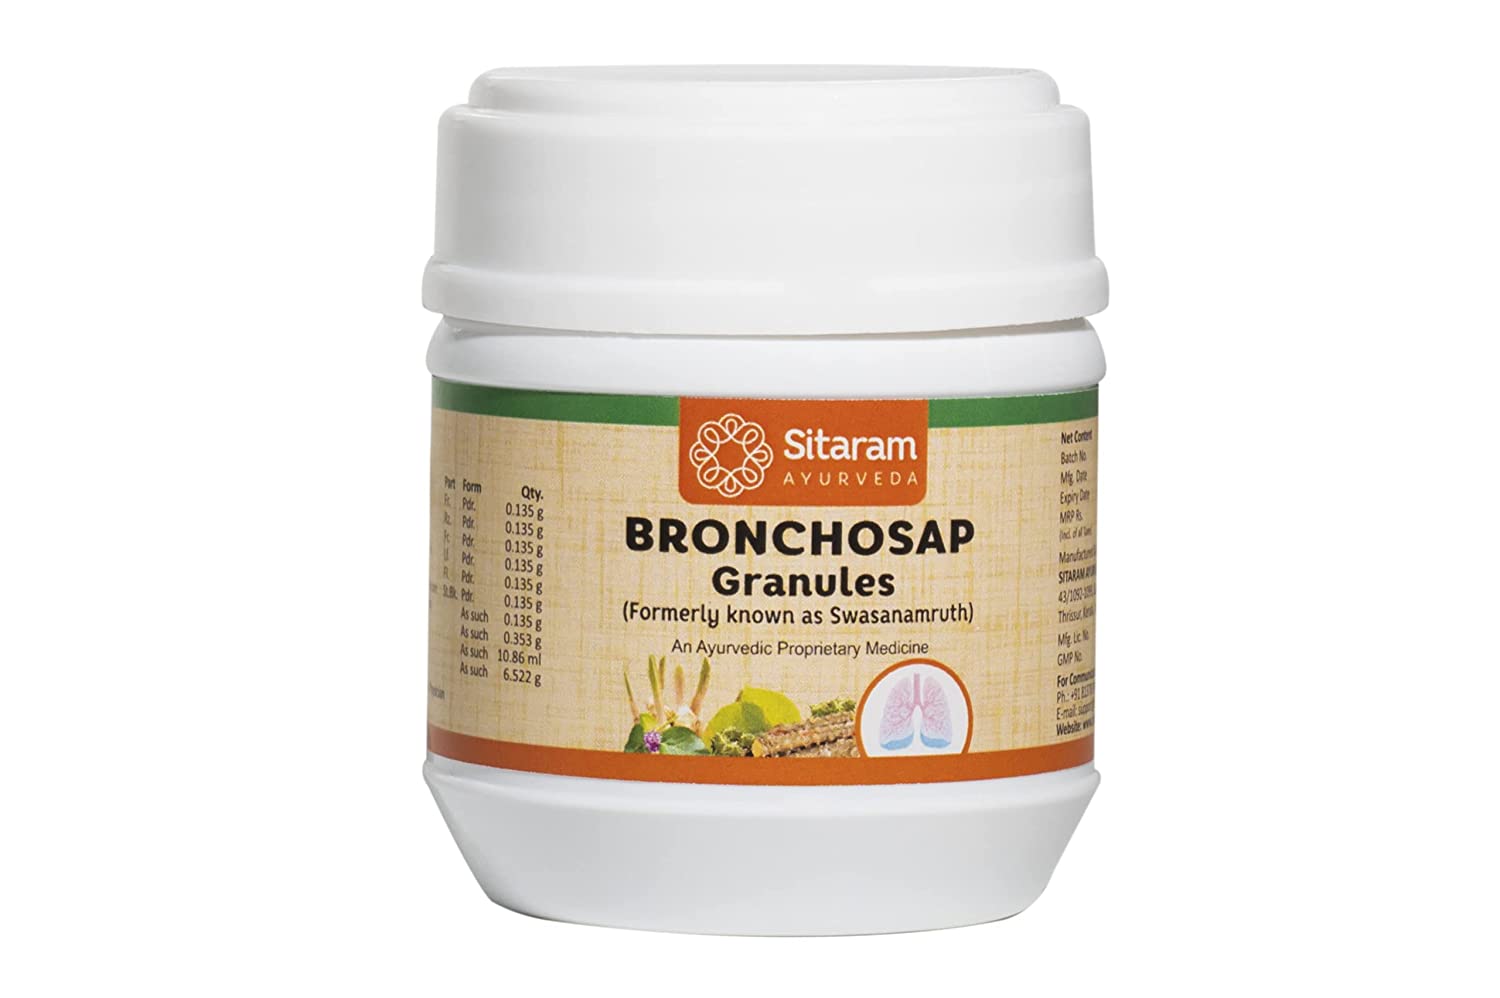 Sitaram Ayurveda Bronchosap Granules 100Gm - pack of 2 (Prescription Medication)